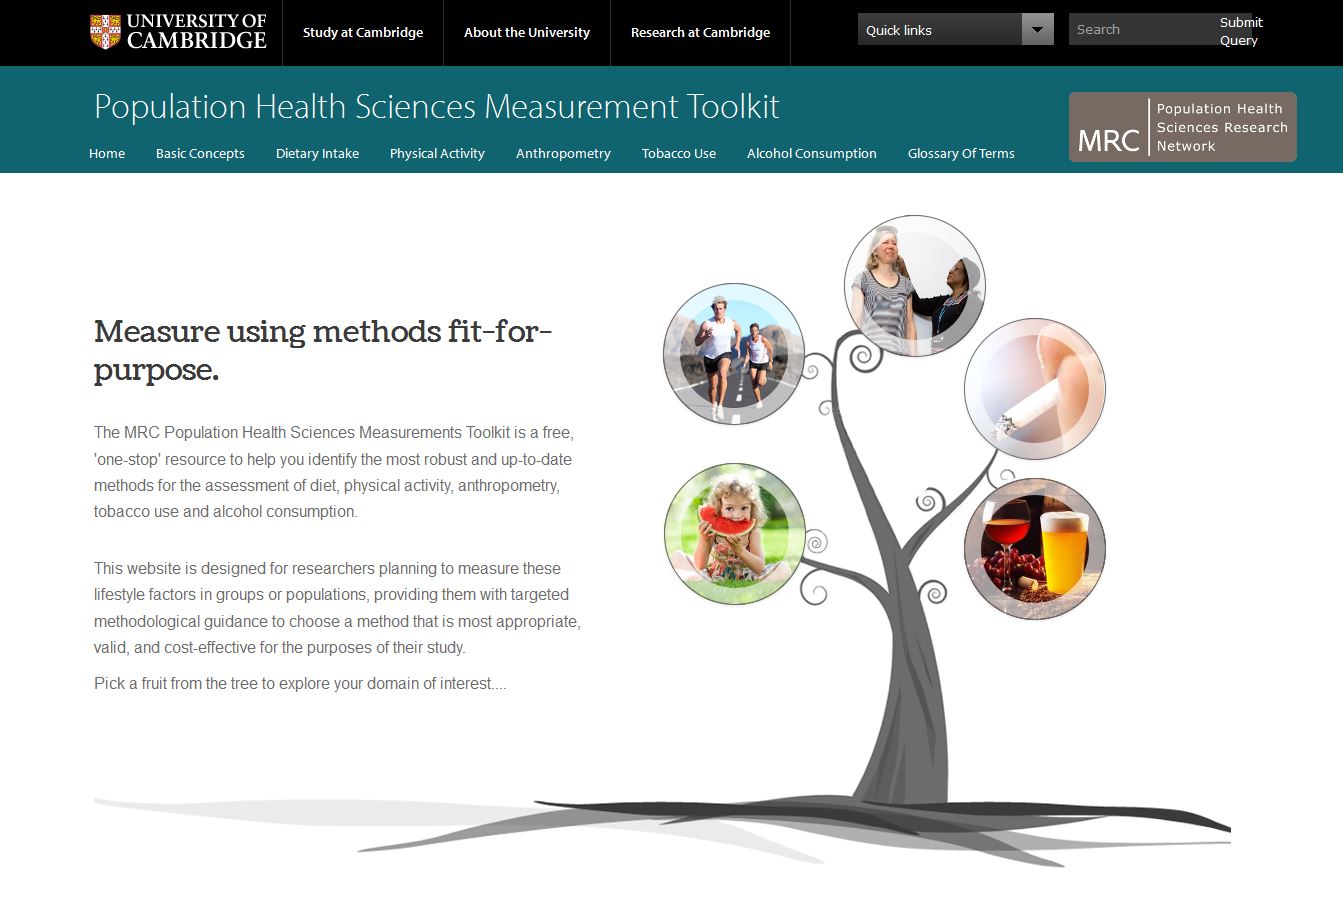 Population Health Sciences Measurement Toolkit's image